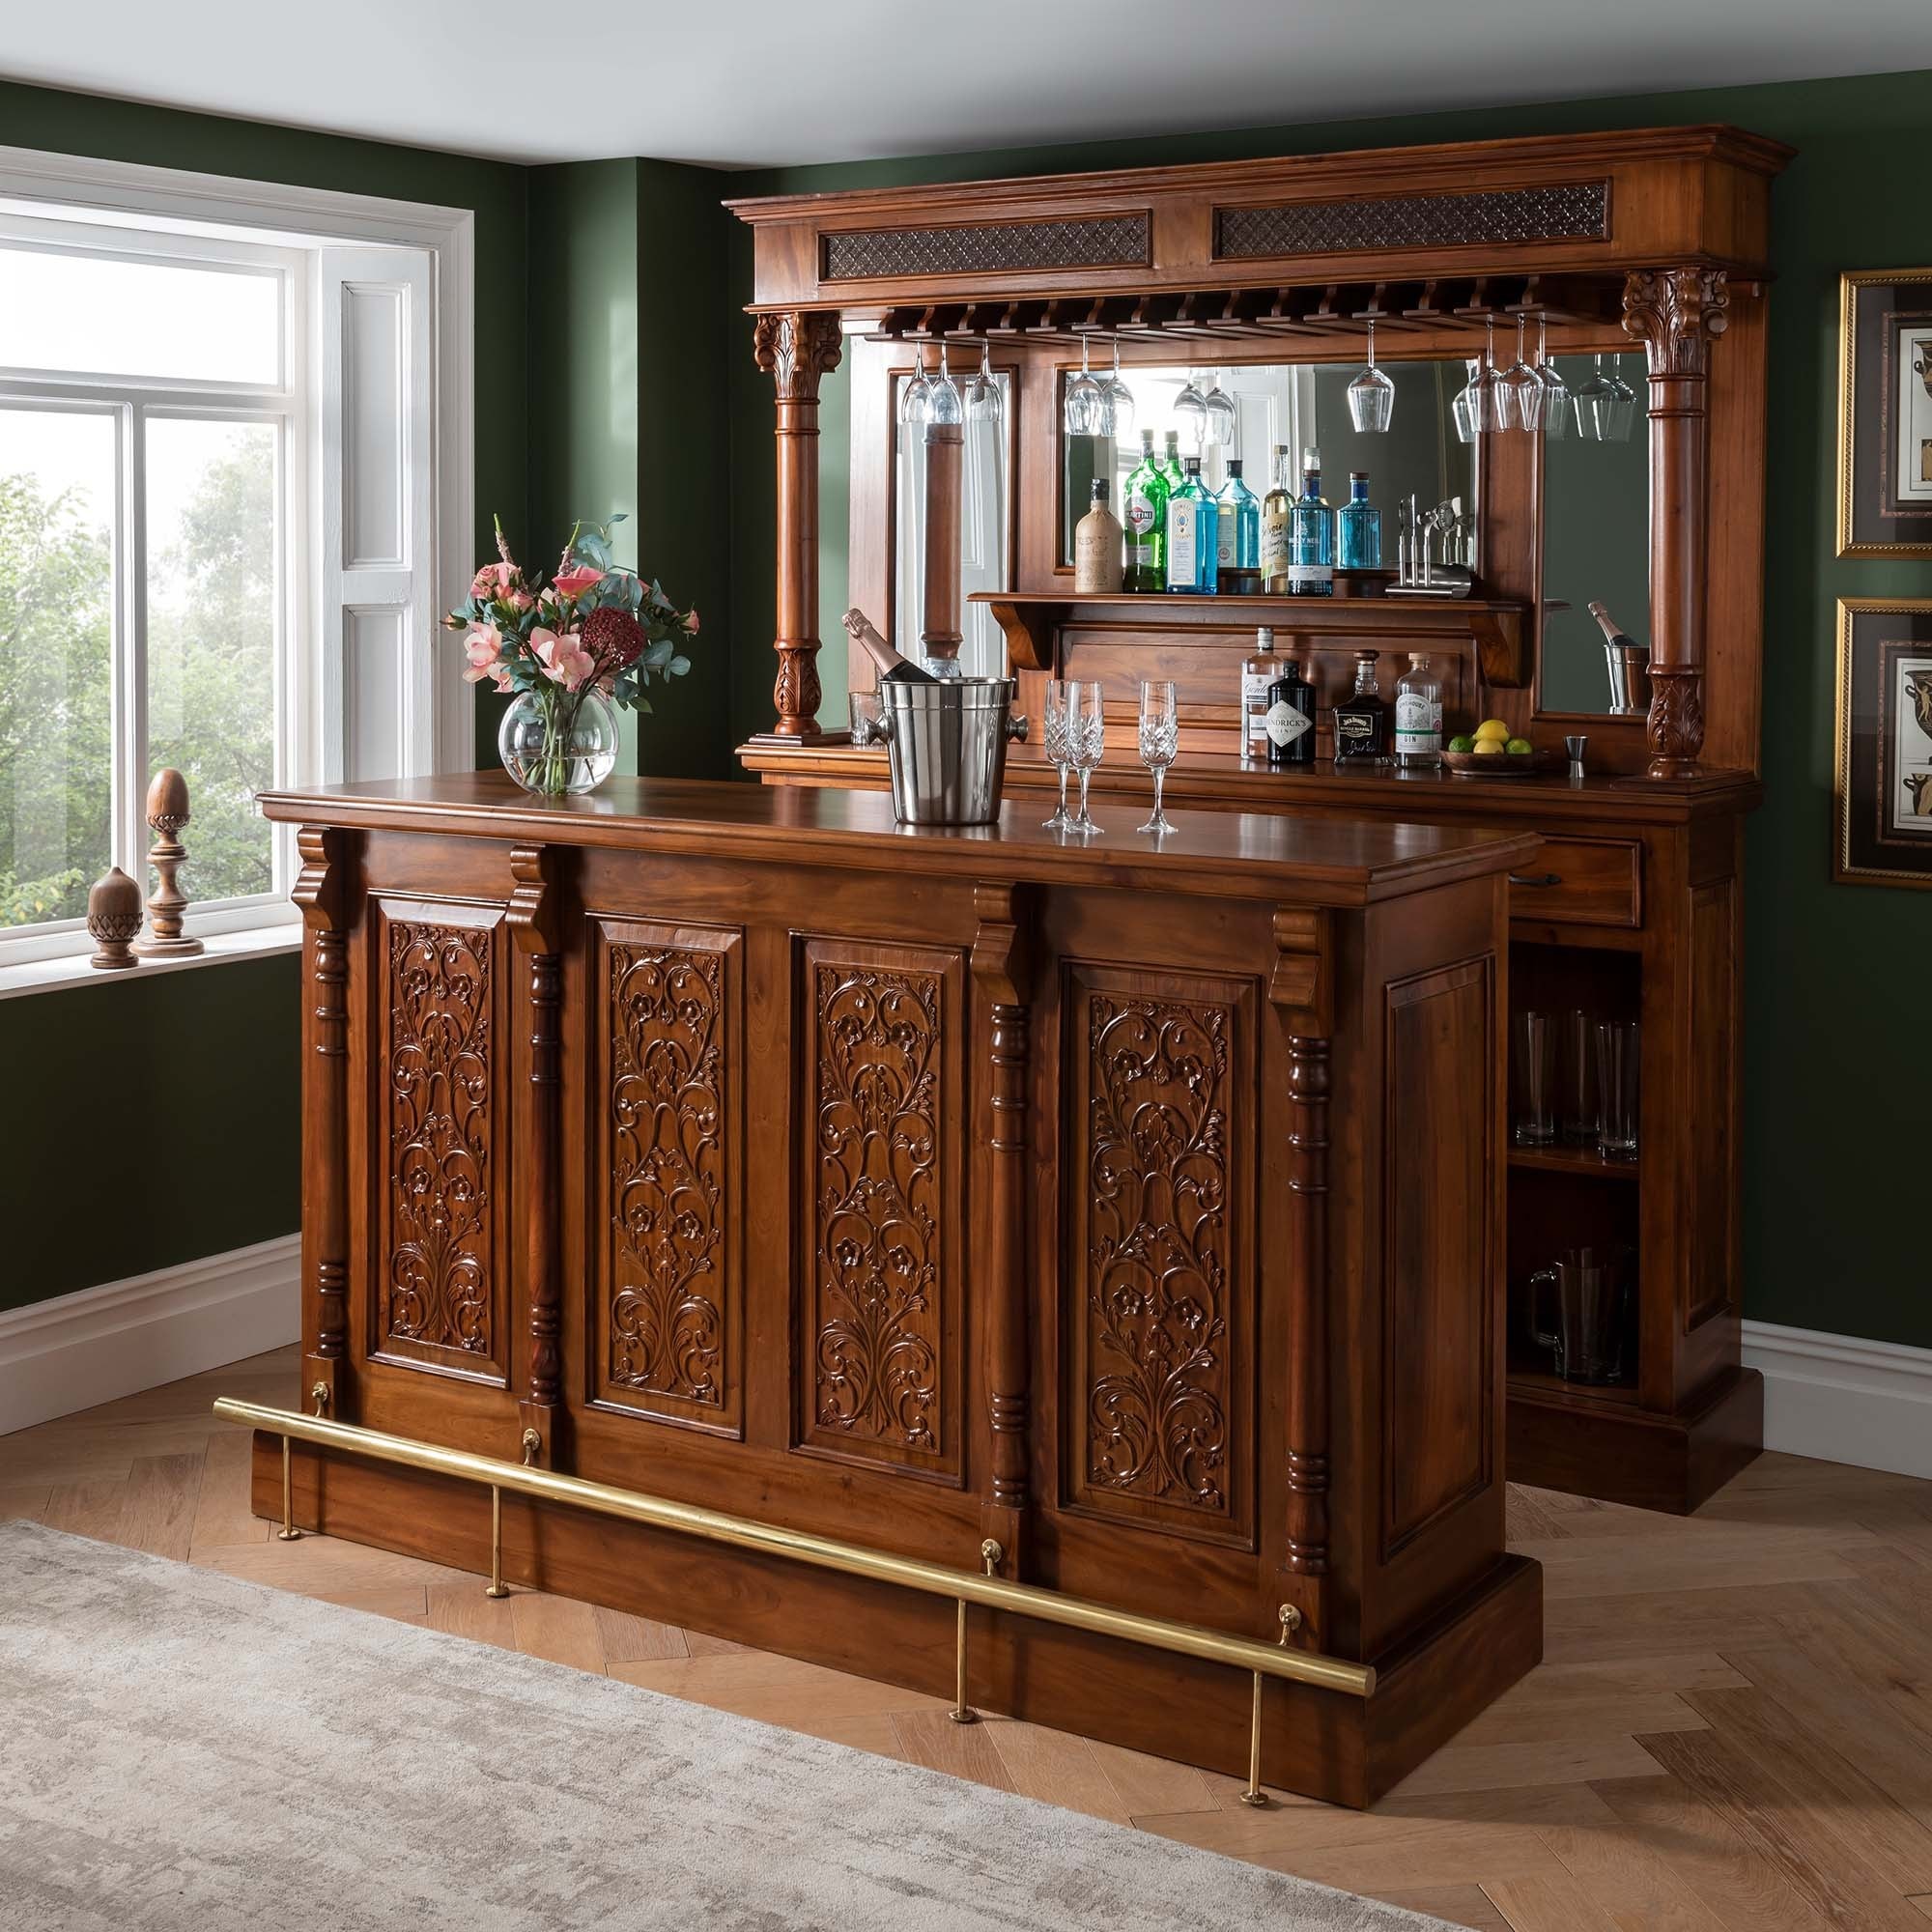 Large Teak Wood home bar with ornate Classic Italian Wood Carving detail- Bespoke Luxury Carved Design- Brand Royalzig Luxury Furniture